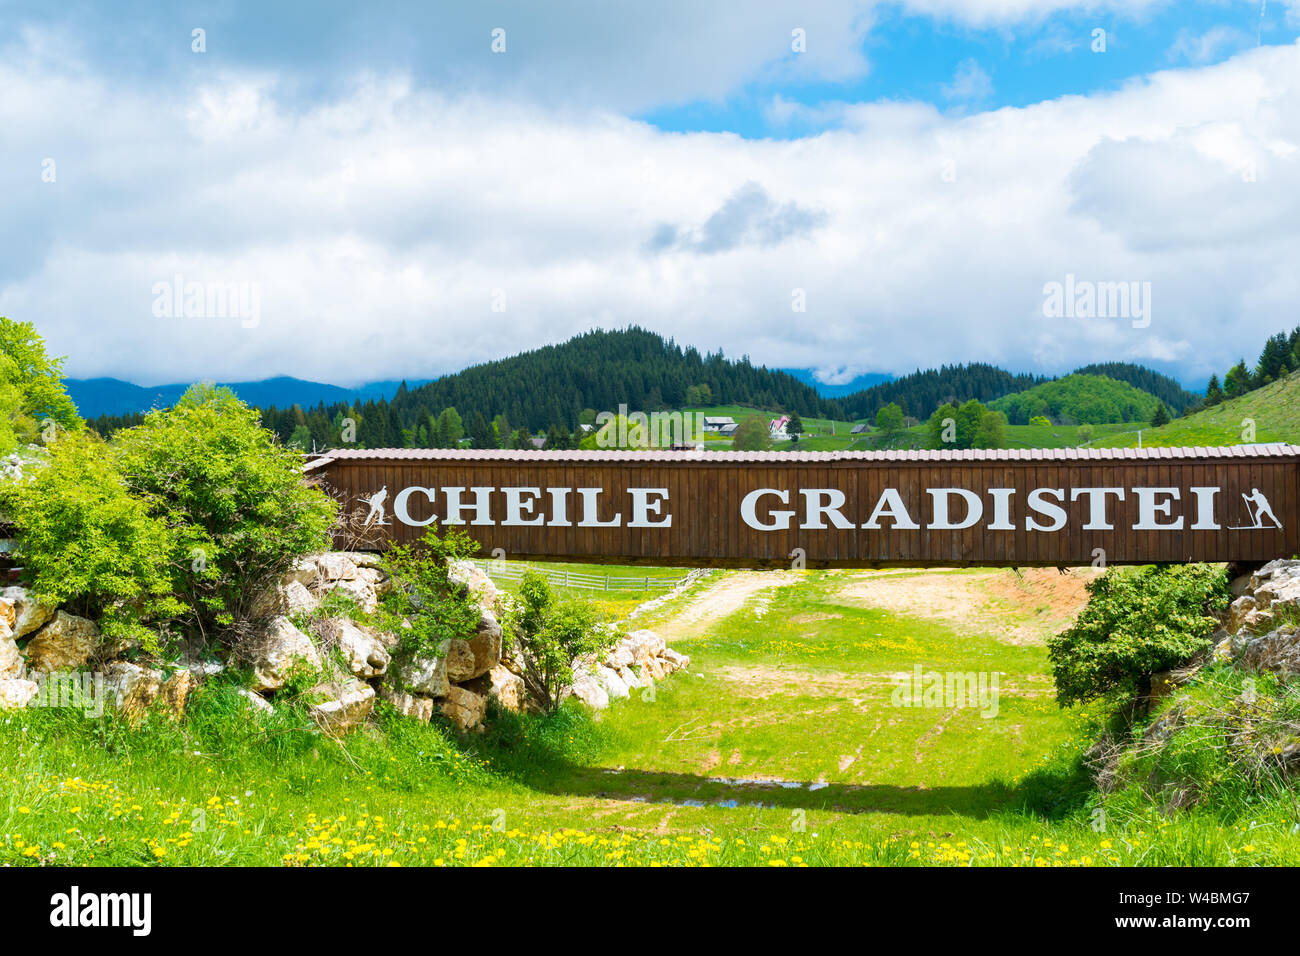 Cheile Gradistei, Fundata, Rumänien - 25. Mai 2019: Cheile Gradistei Brücke, Fundata, Brasov, Rumänien. Stockfoto